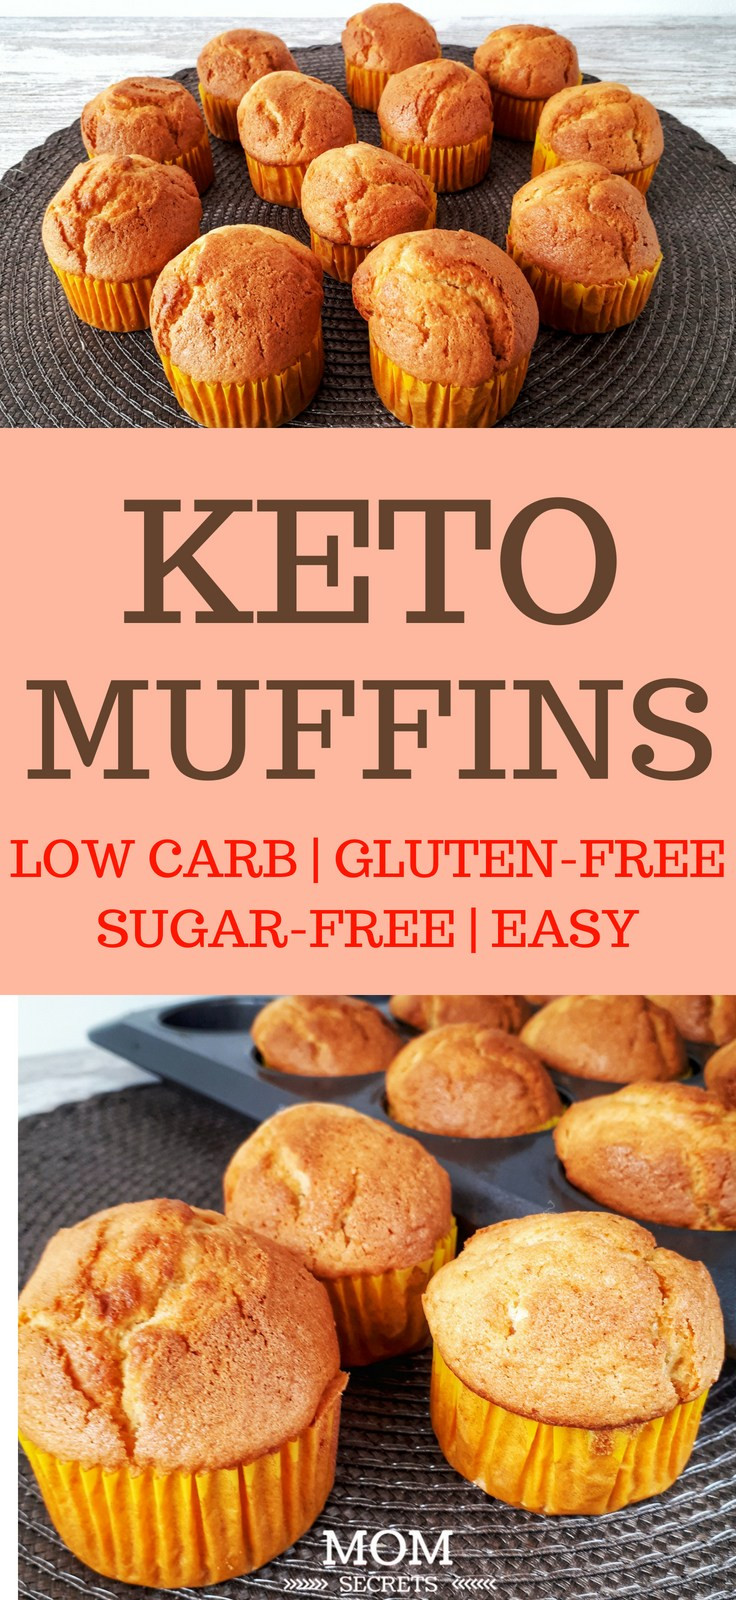 Healthy Keto Breakfast Recipes On The Go
 Quick Keto Breakfast the Go 15 Top Ideas for Fat